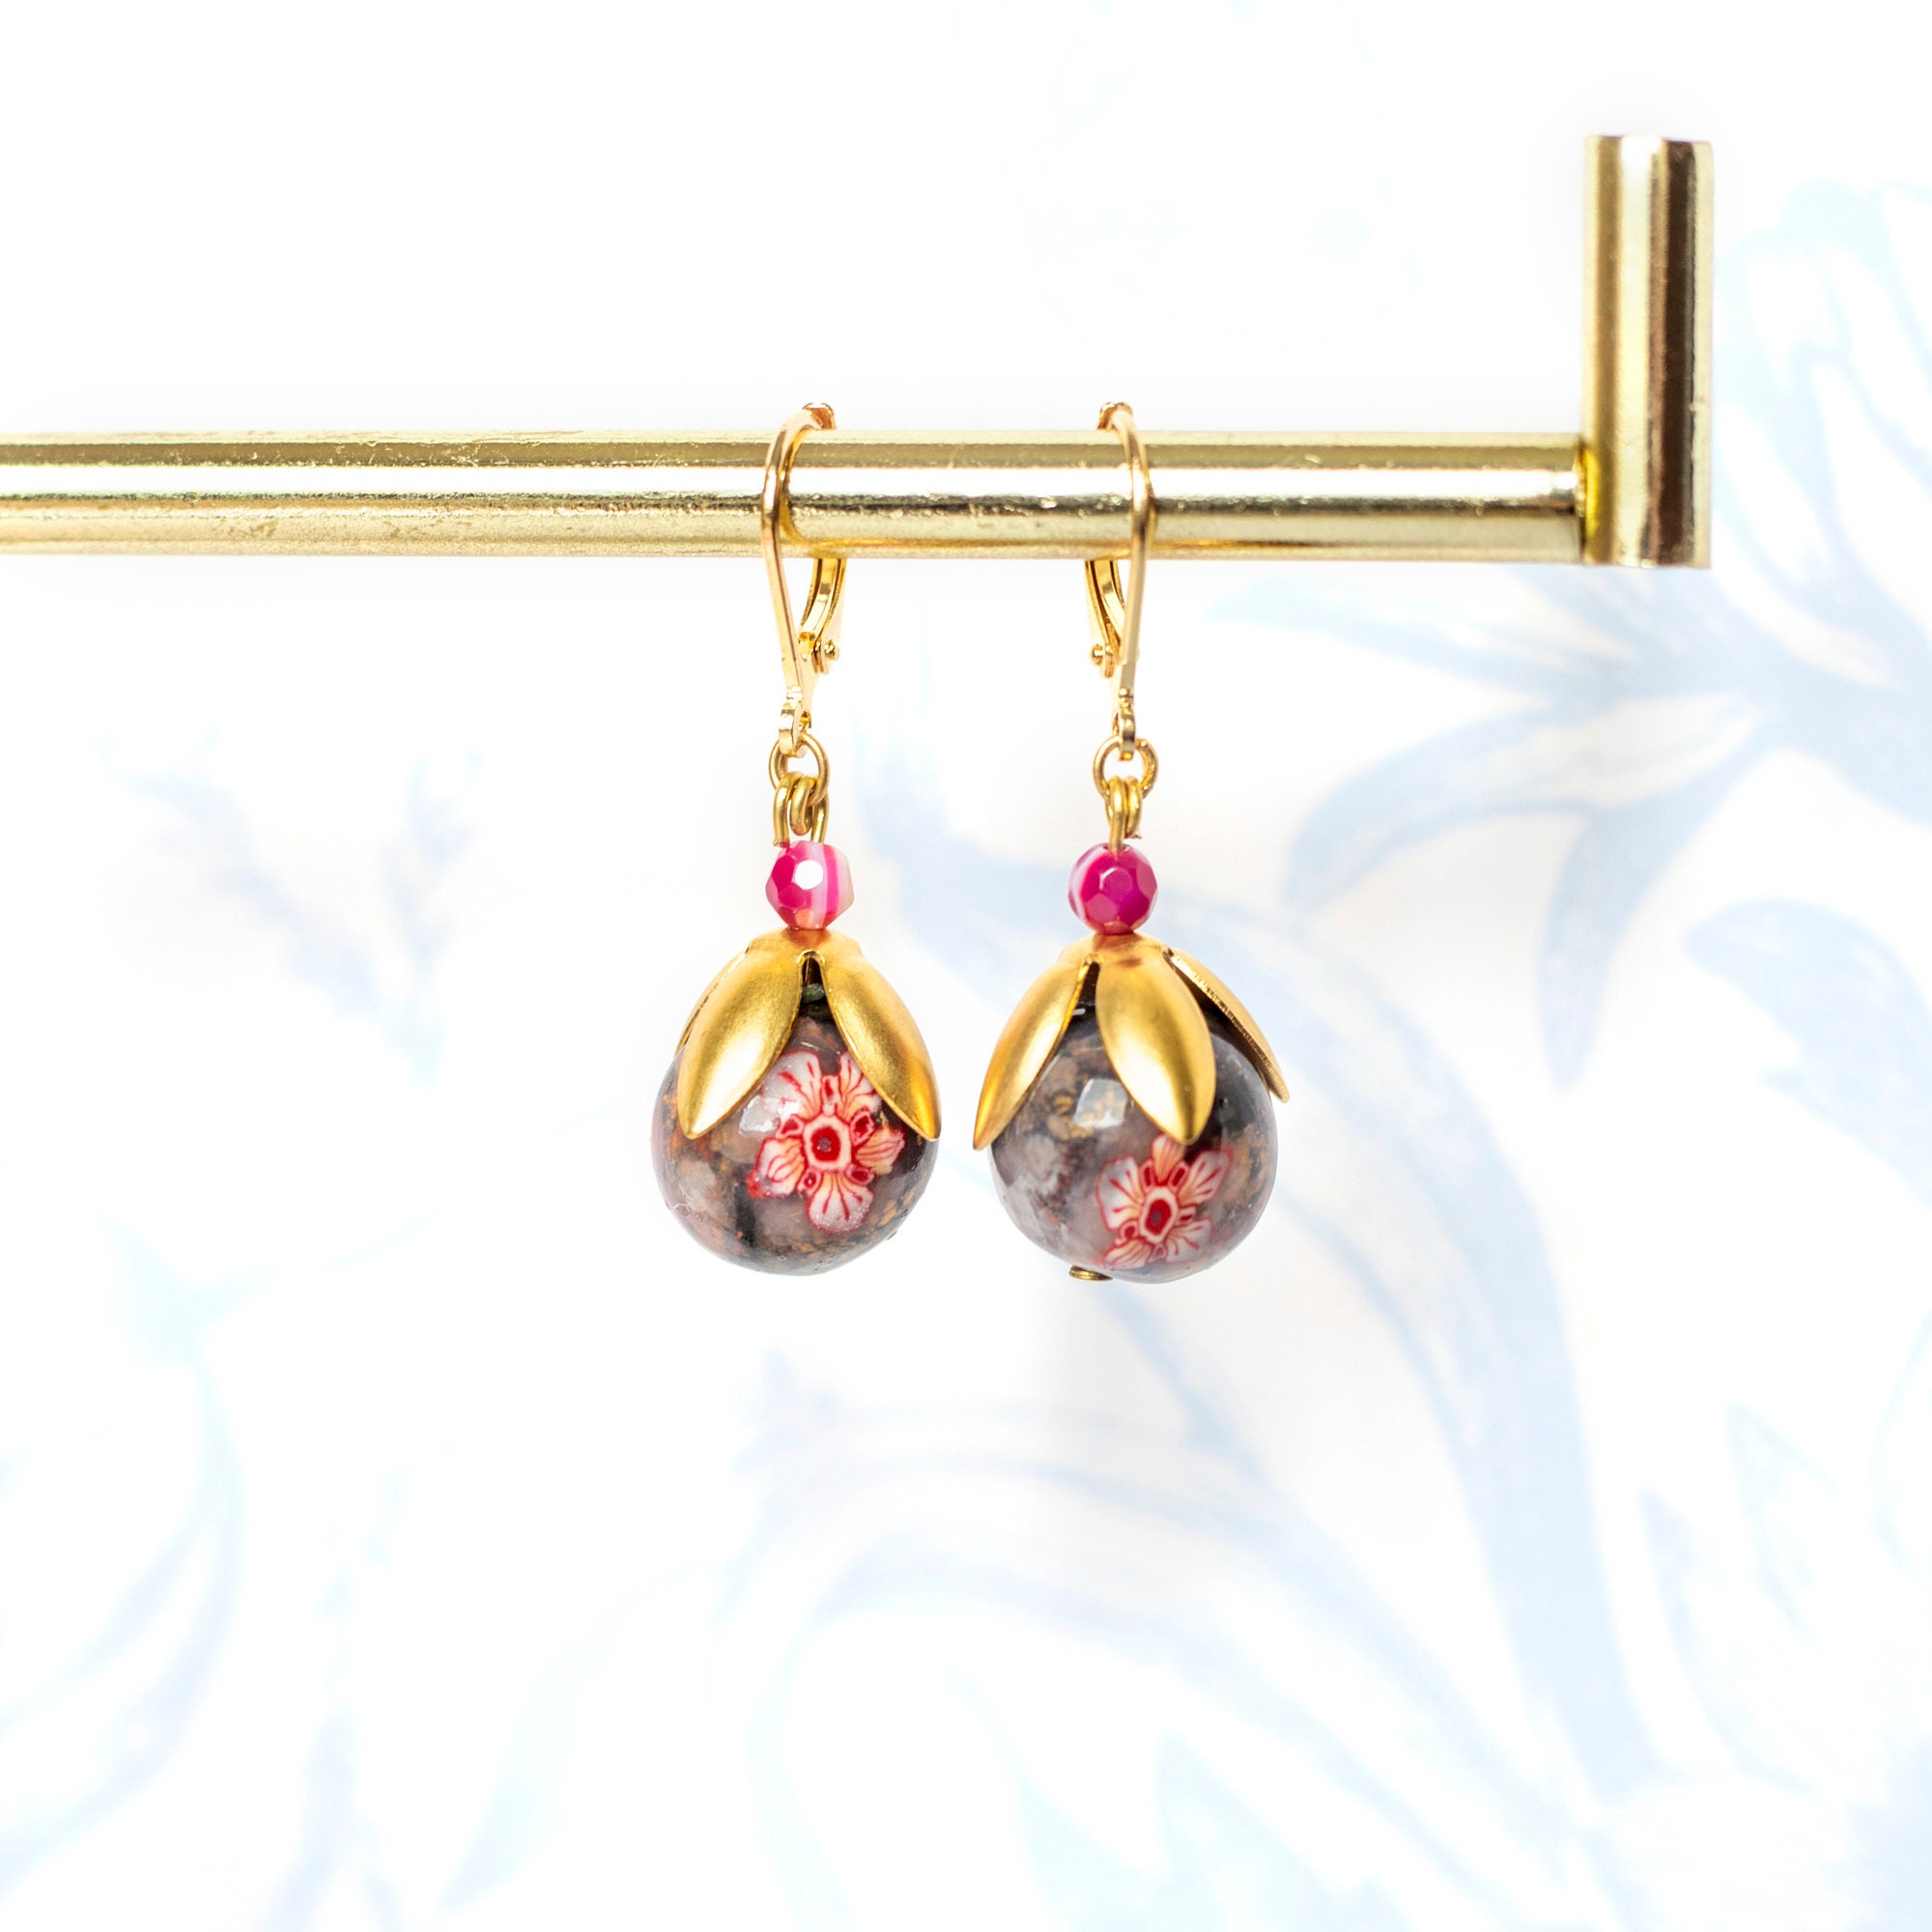 Blush Pink and Gold Ginkgo Leaf Earrings Lightweight Leather Dangle Earrings Handmade Earrings Gift for Bridesmaid Earrings